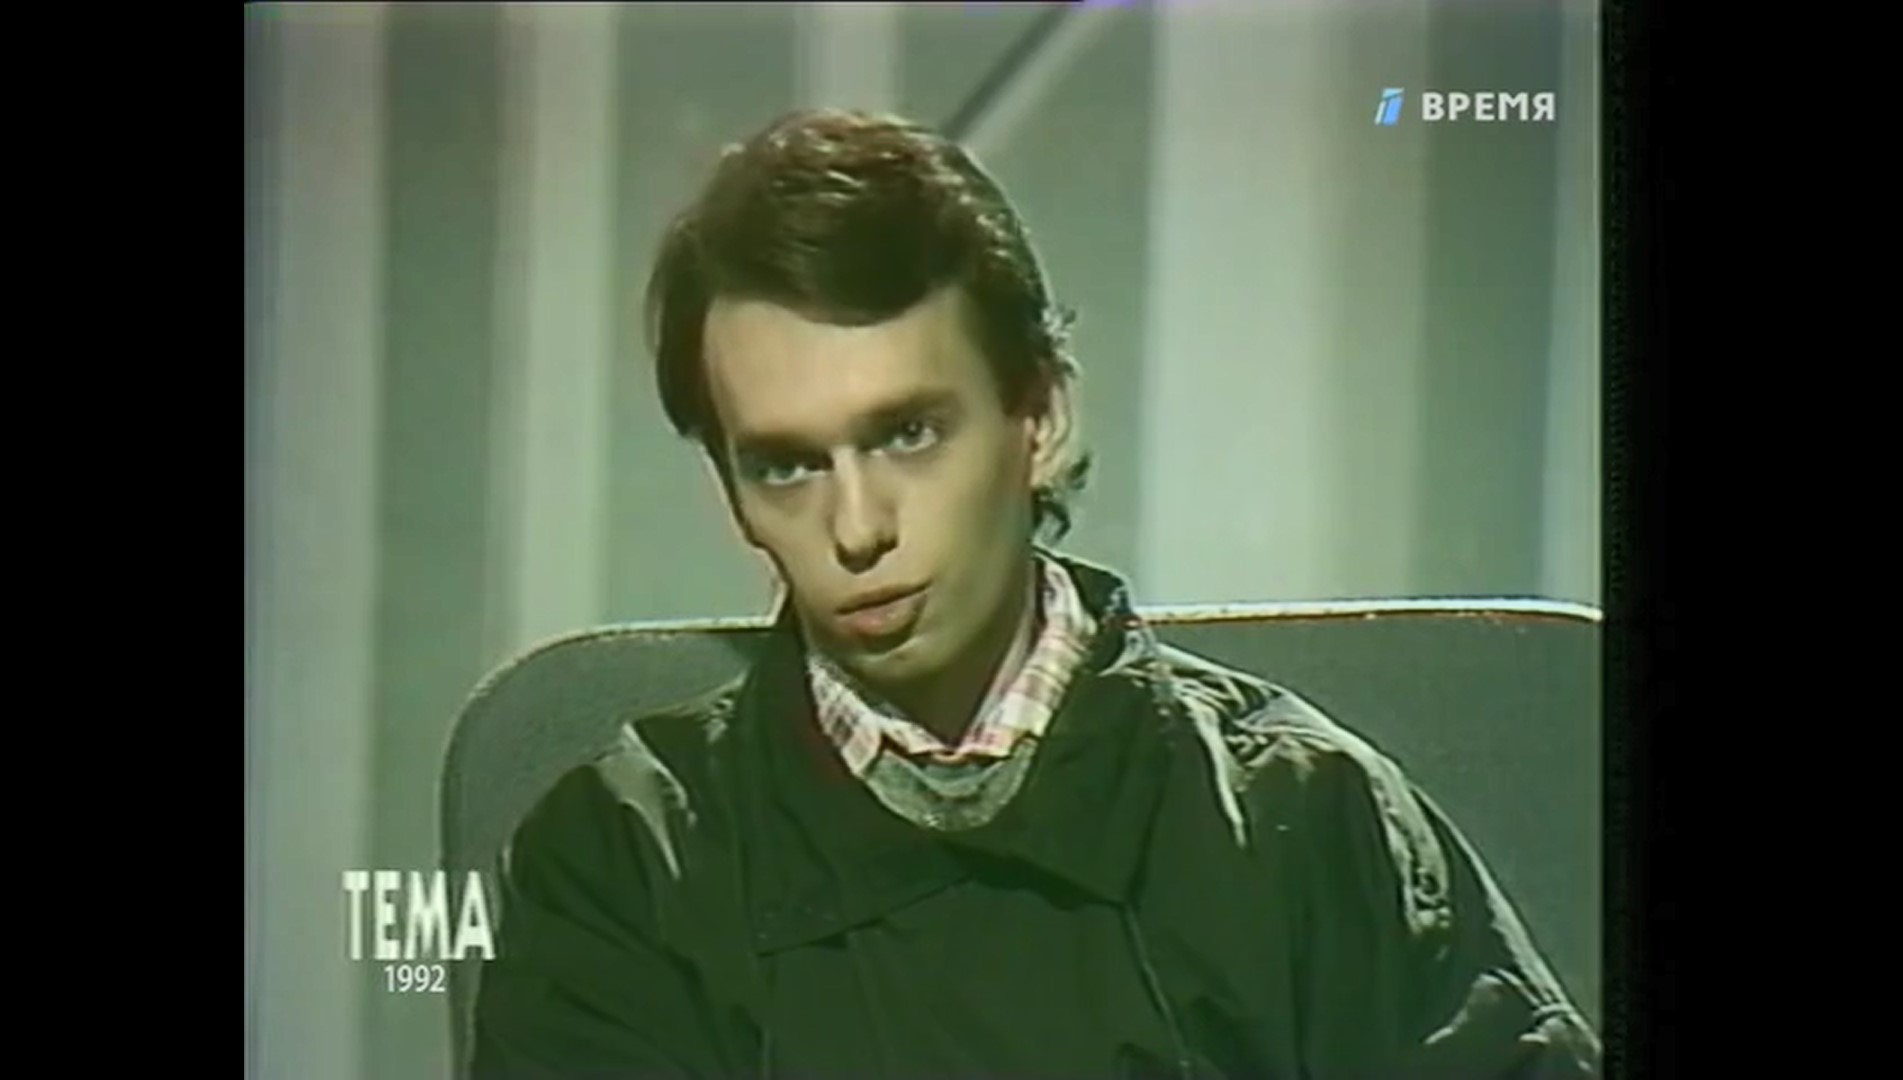 Геннадий Рощупкин, ВИЧ-активист, выпуск передачи "Тема", 1992 год.